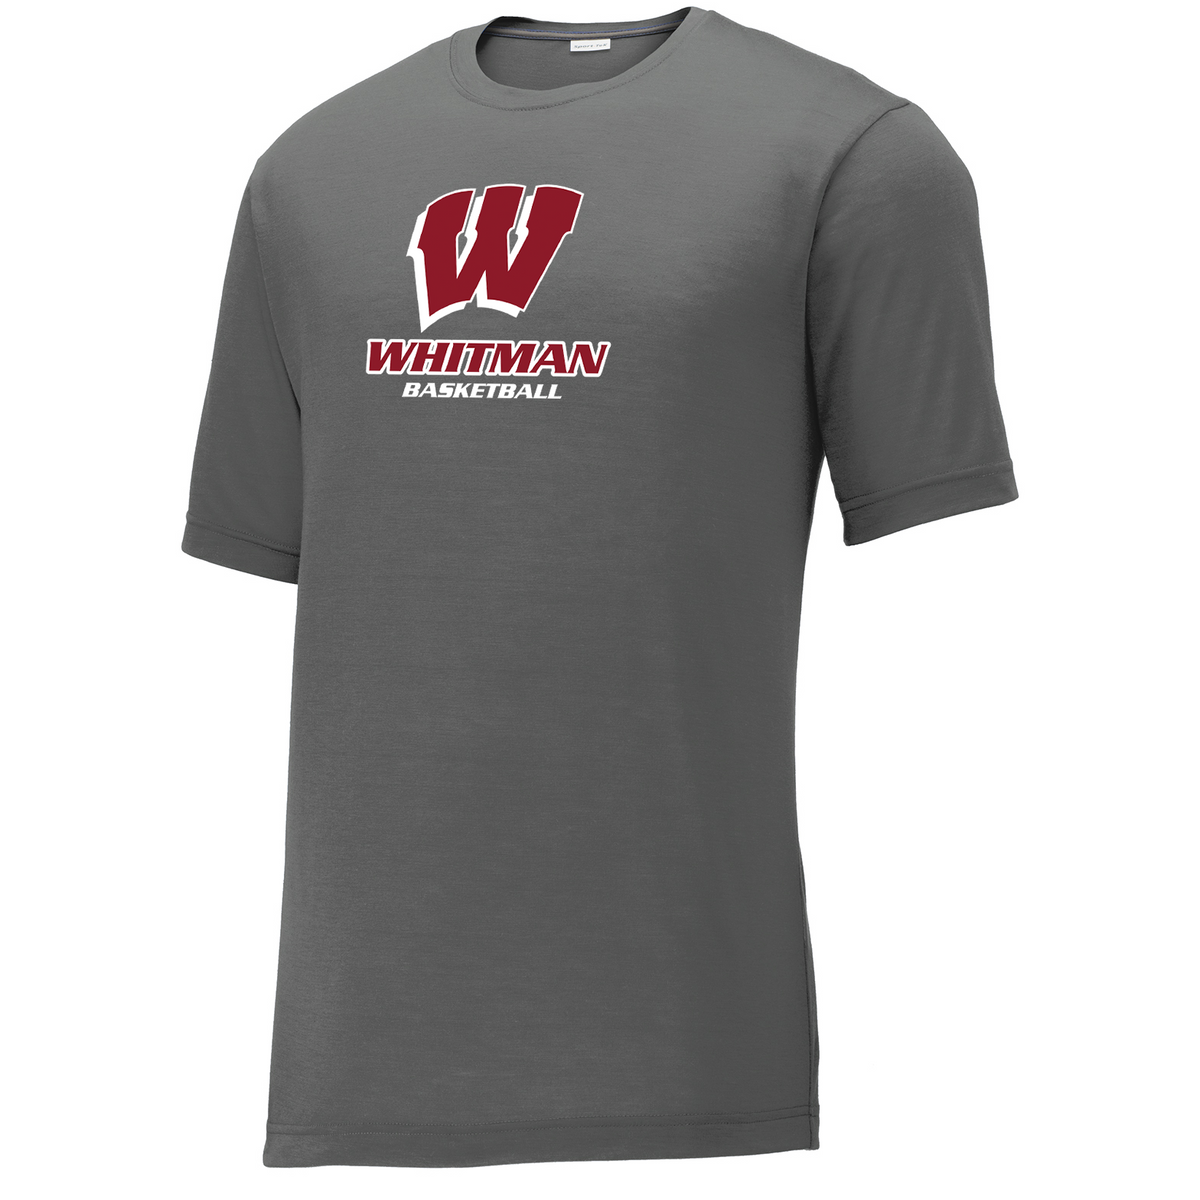 Whitman Basketball CottonTouch Performance T-Shirt